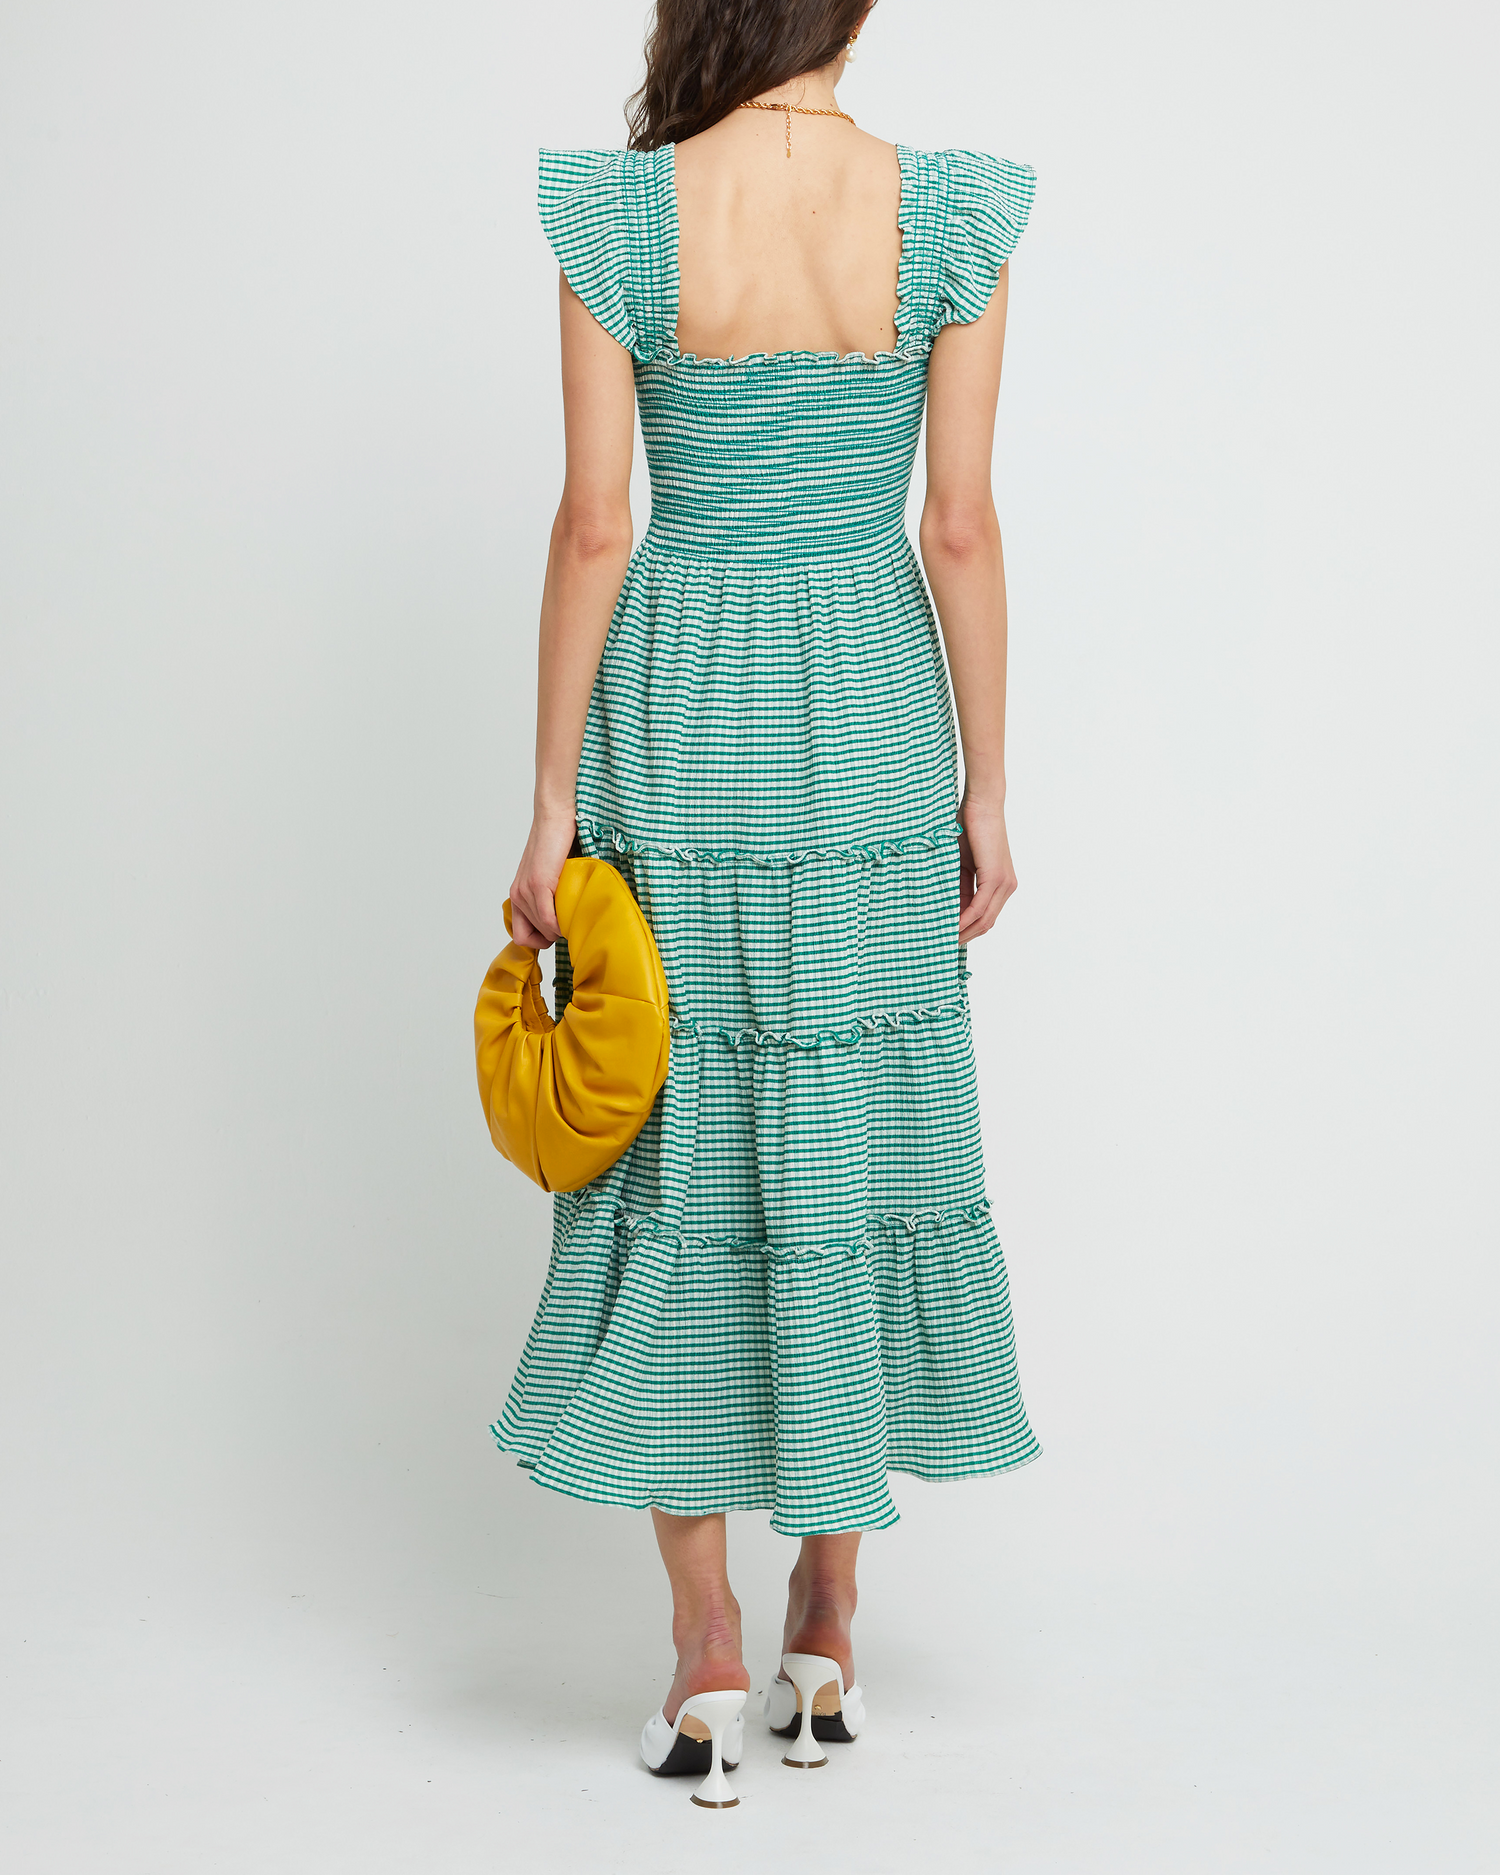 Second image of Calypso Maxi Dress, a green maxi dress, ruffle cap sleeves, smocked bodice